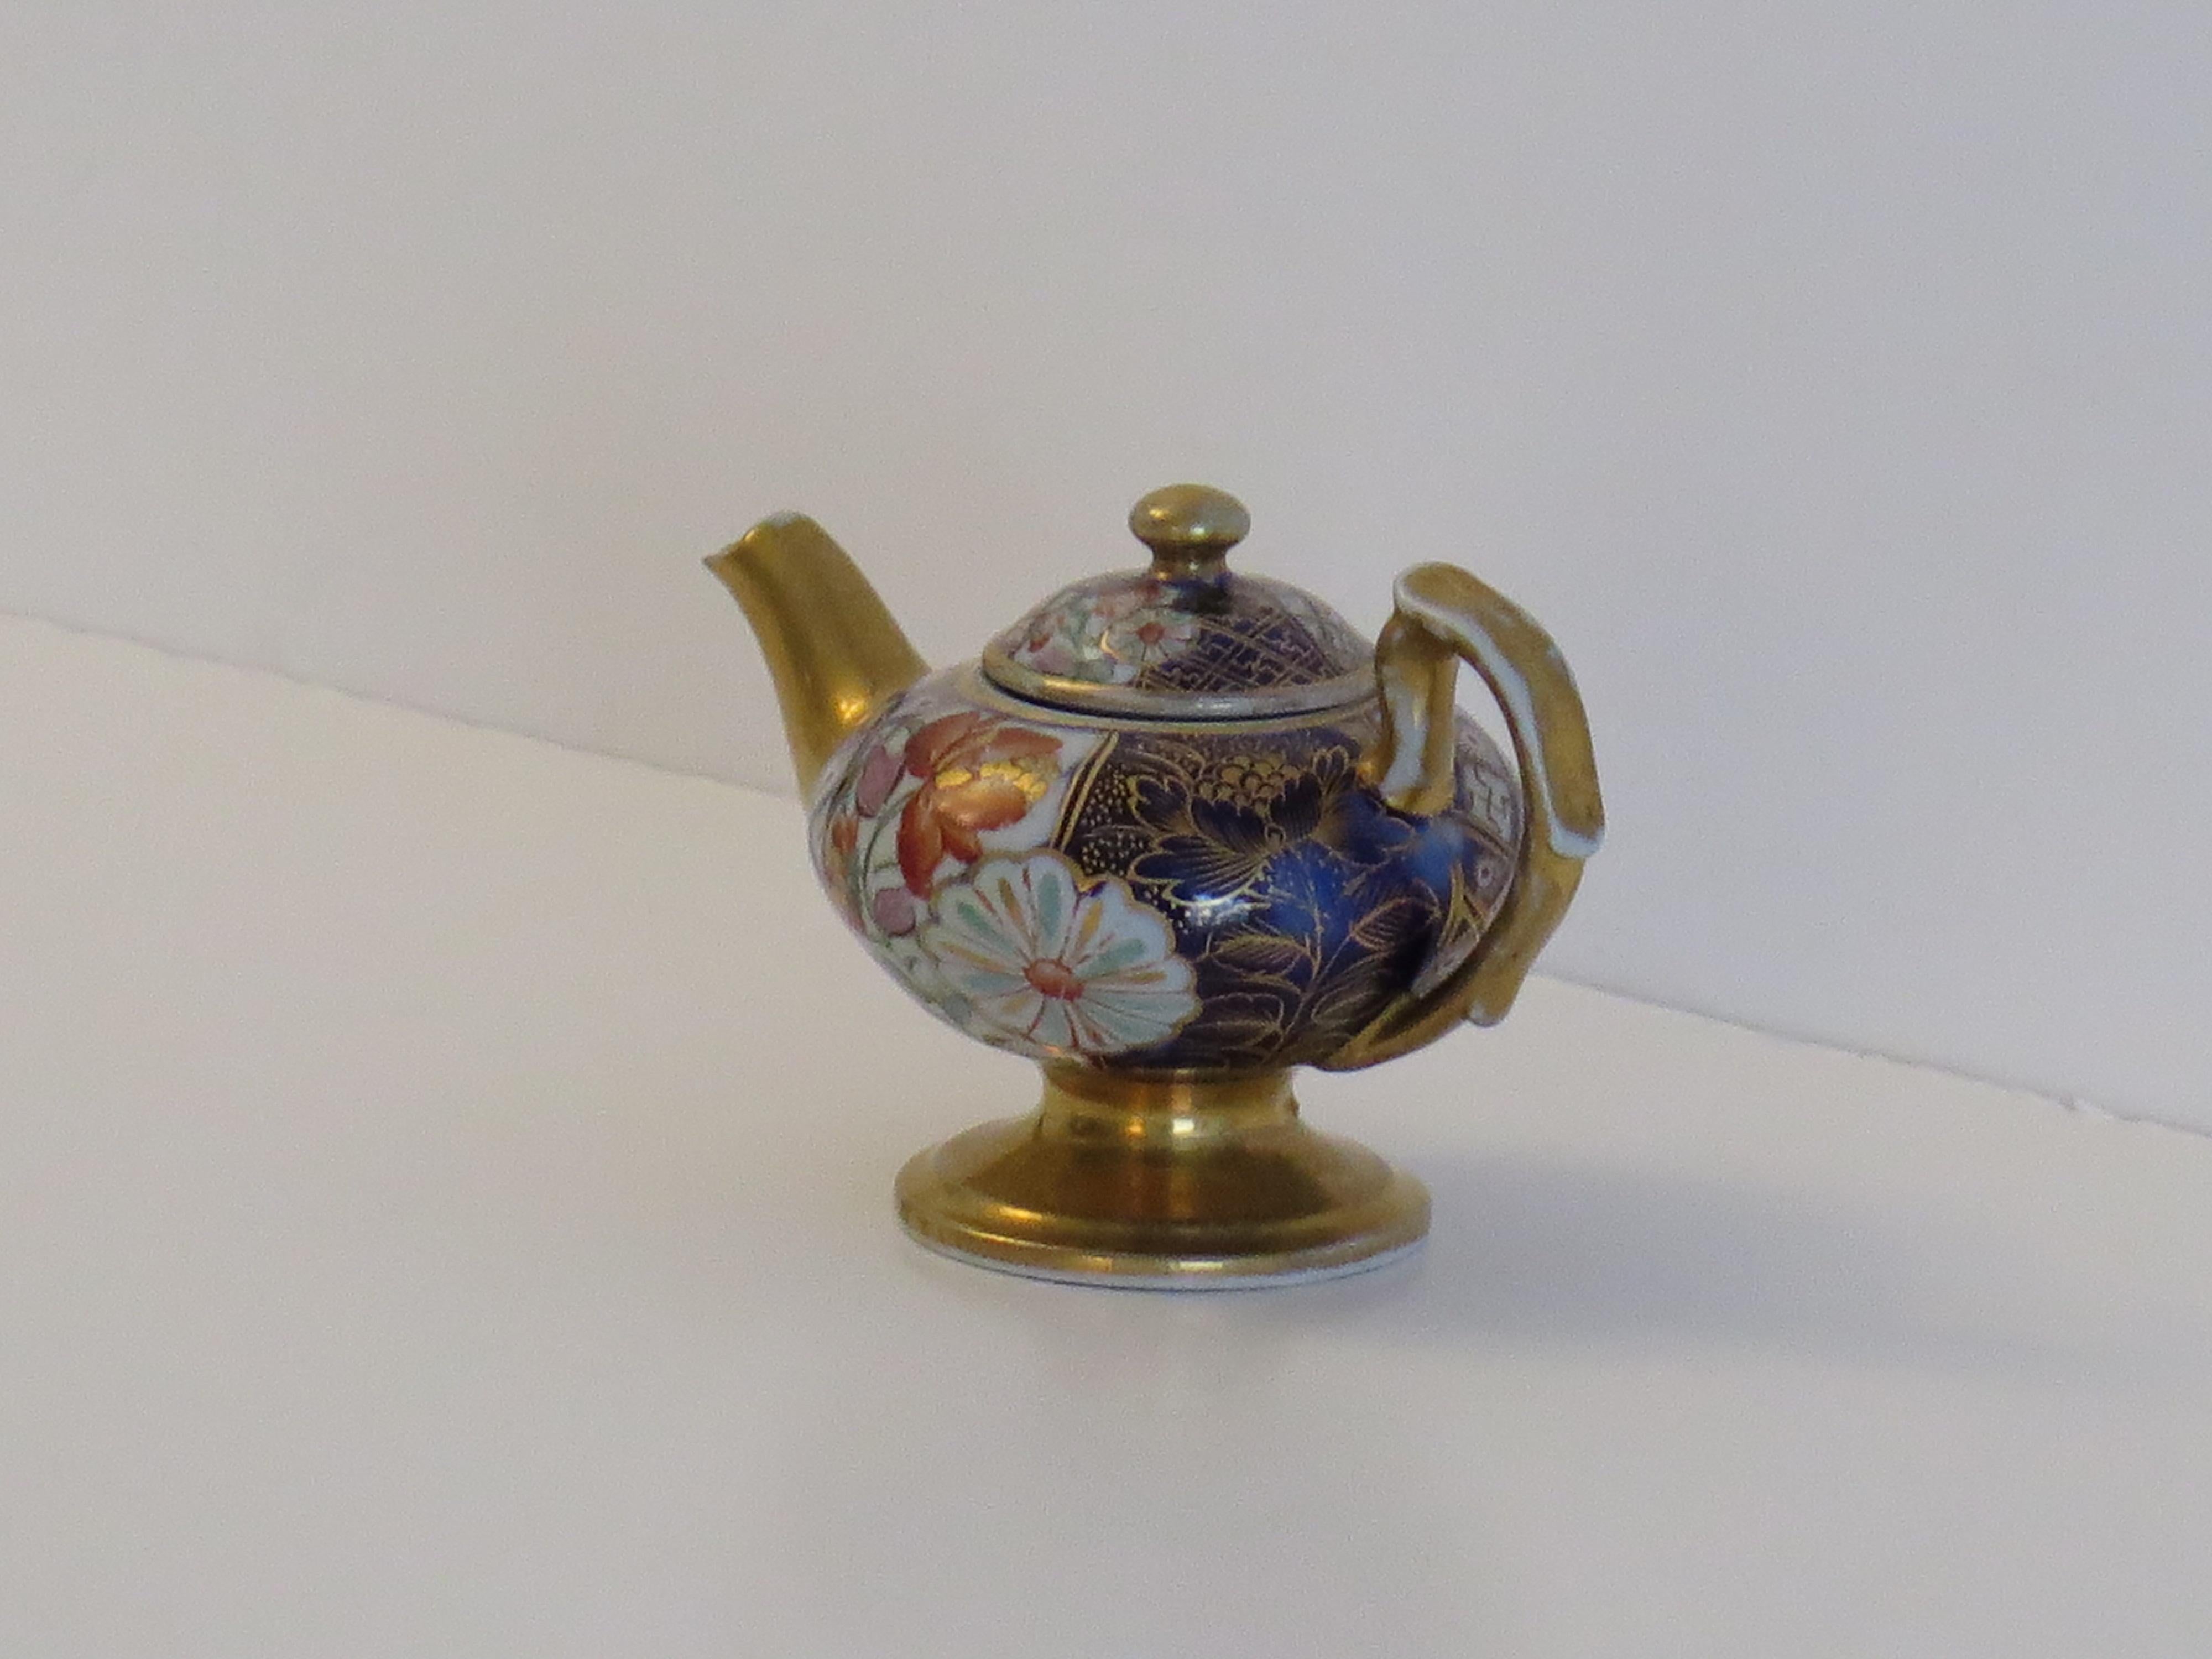 Rare Mason's Ironstone Miniature Teapot in Plaid Japan rare Pattern, circa 1820 For Sale 1